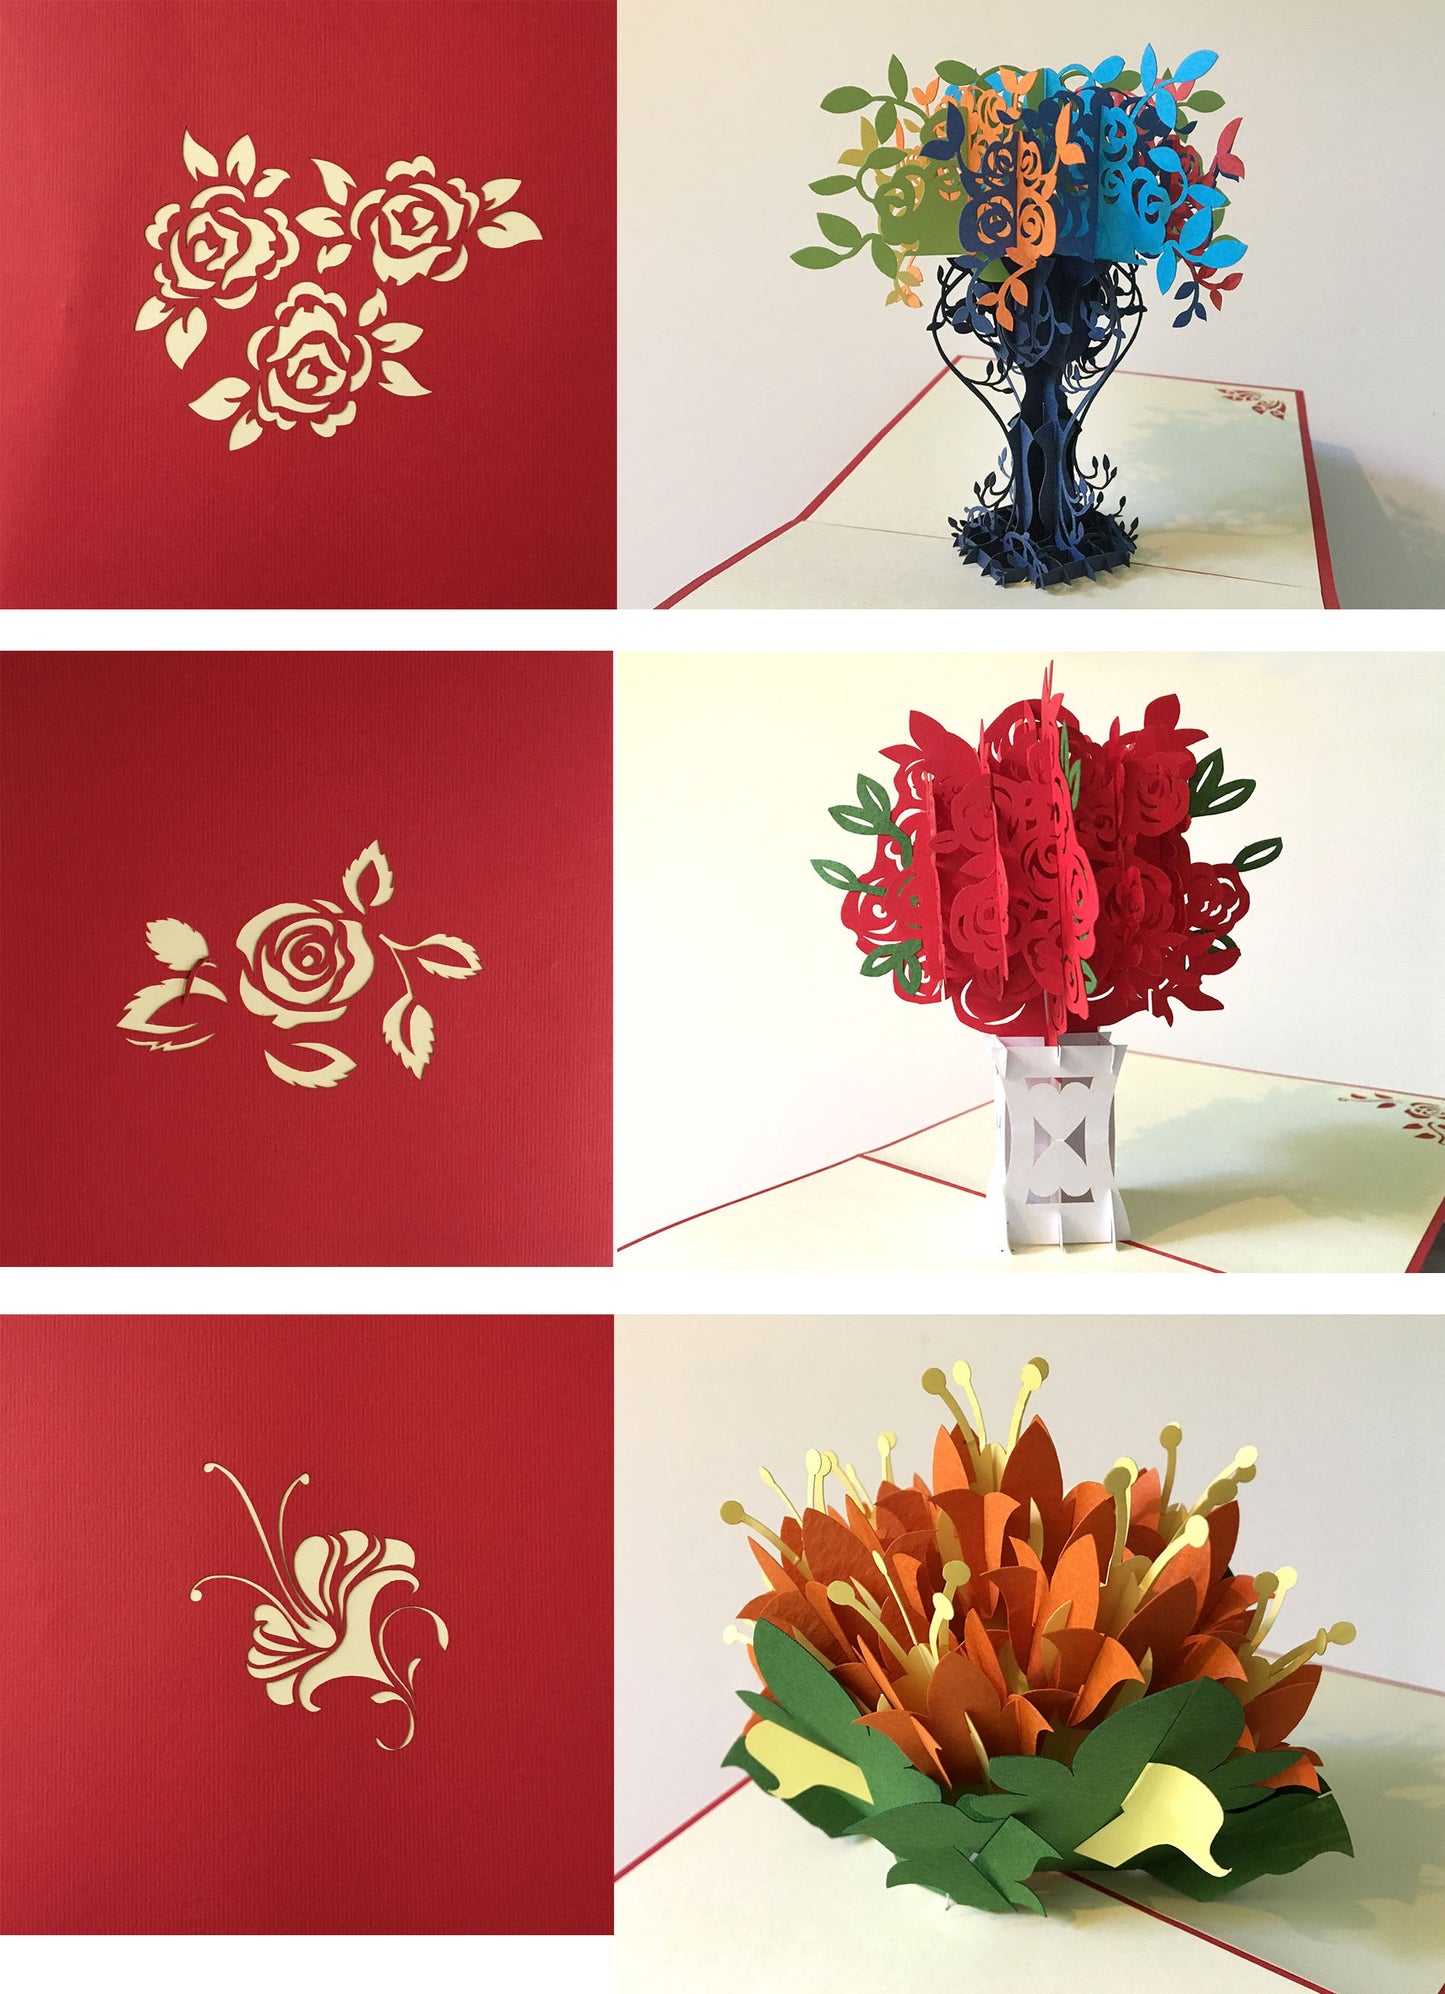 (3 Cards Pack) 3D Pop Up Flower Card 5.75 Inch Greeting Card Red Rose Heart Vase